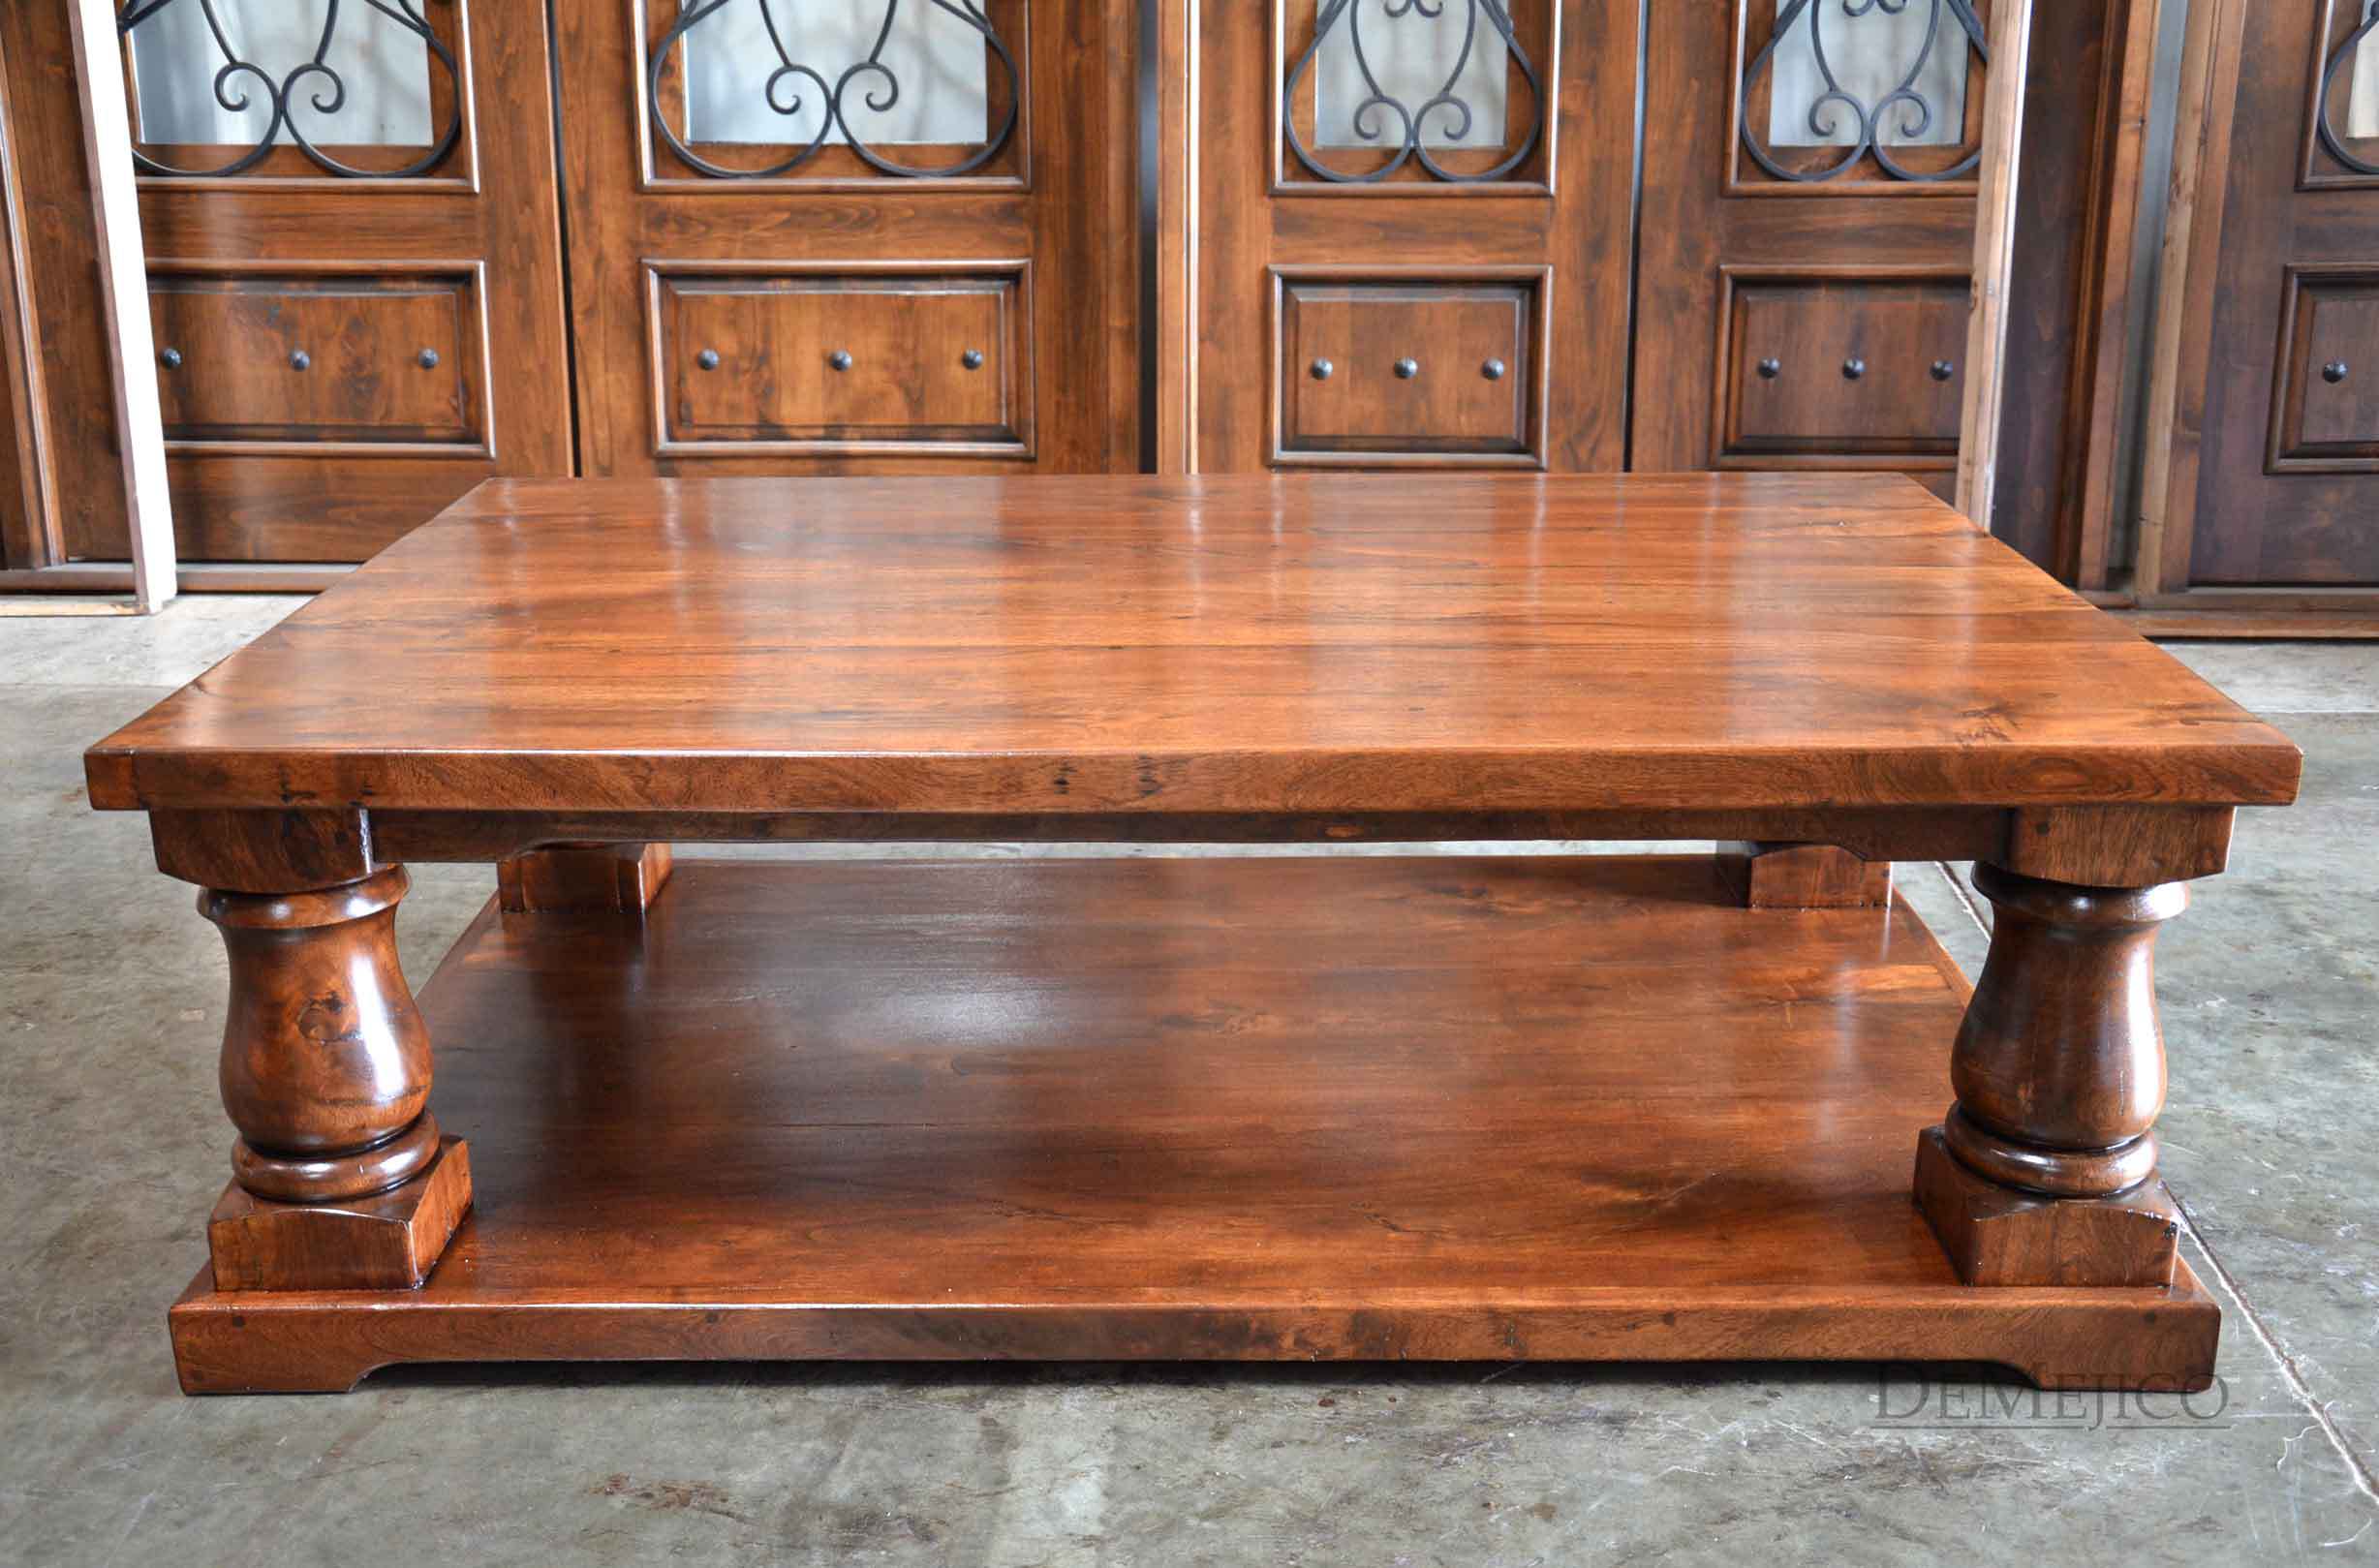 Elegant Rustic Coffee Table